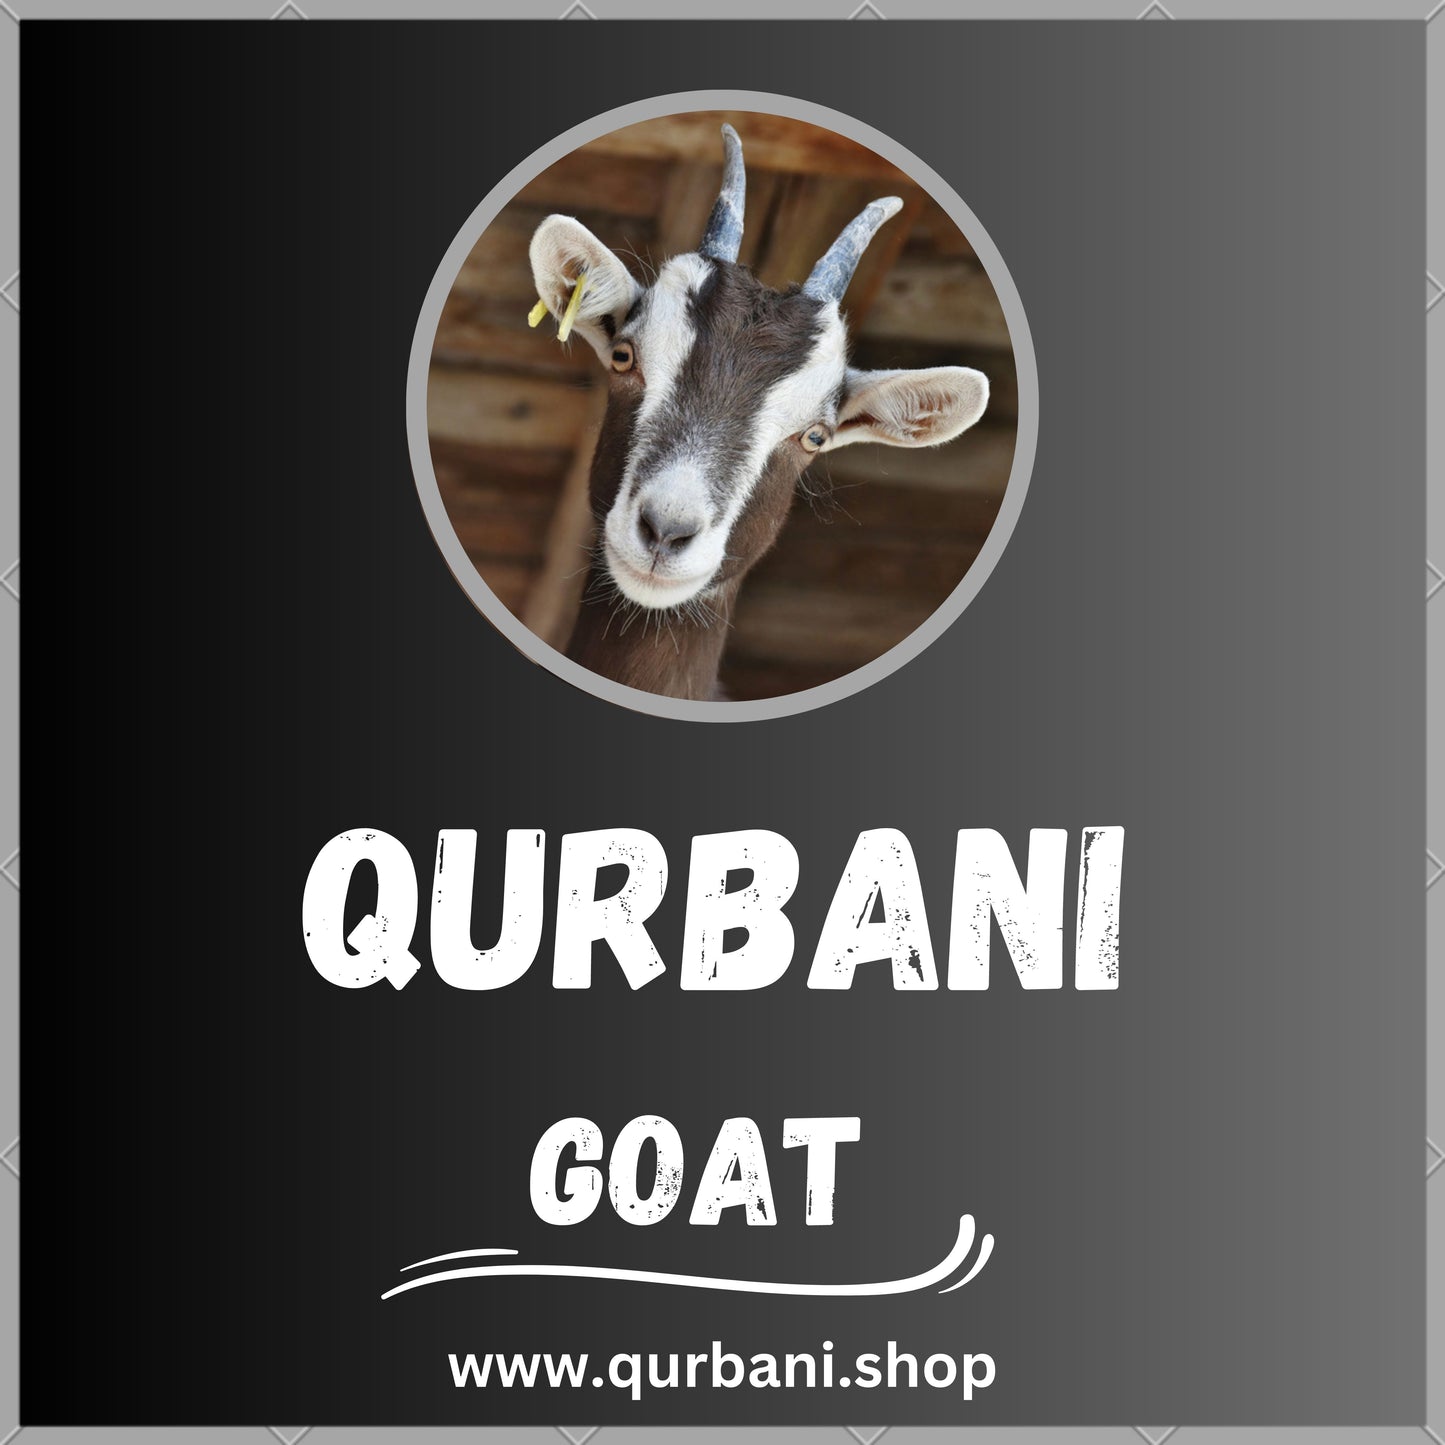 Perform Qurbani in Cincinnati - Book Your Eid Sacrifice